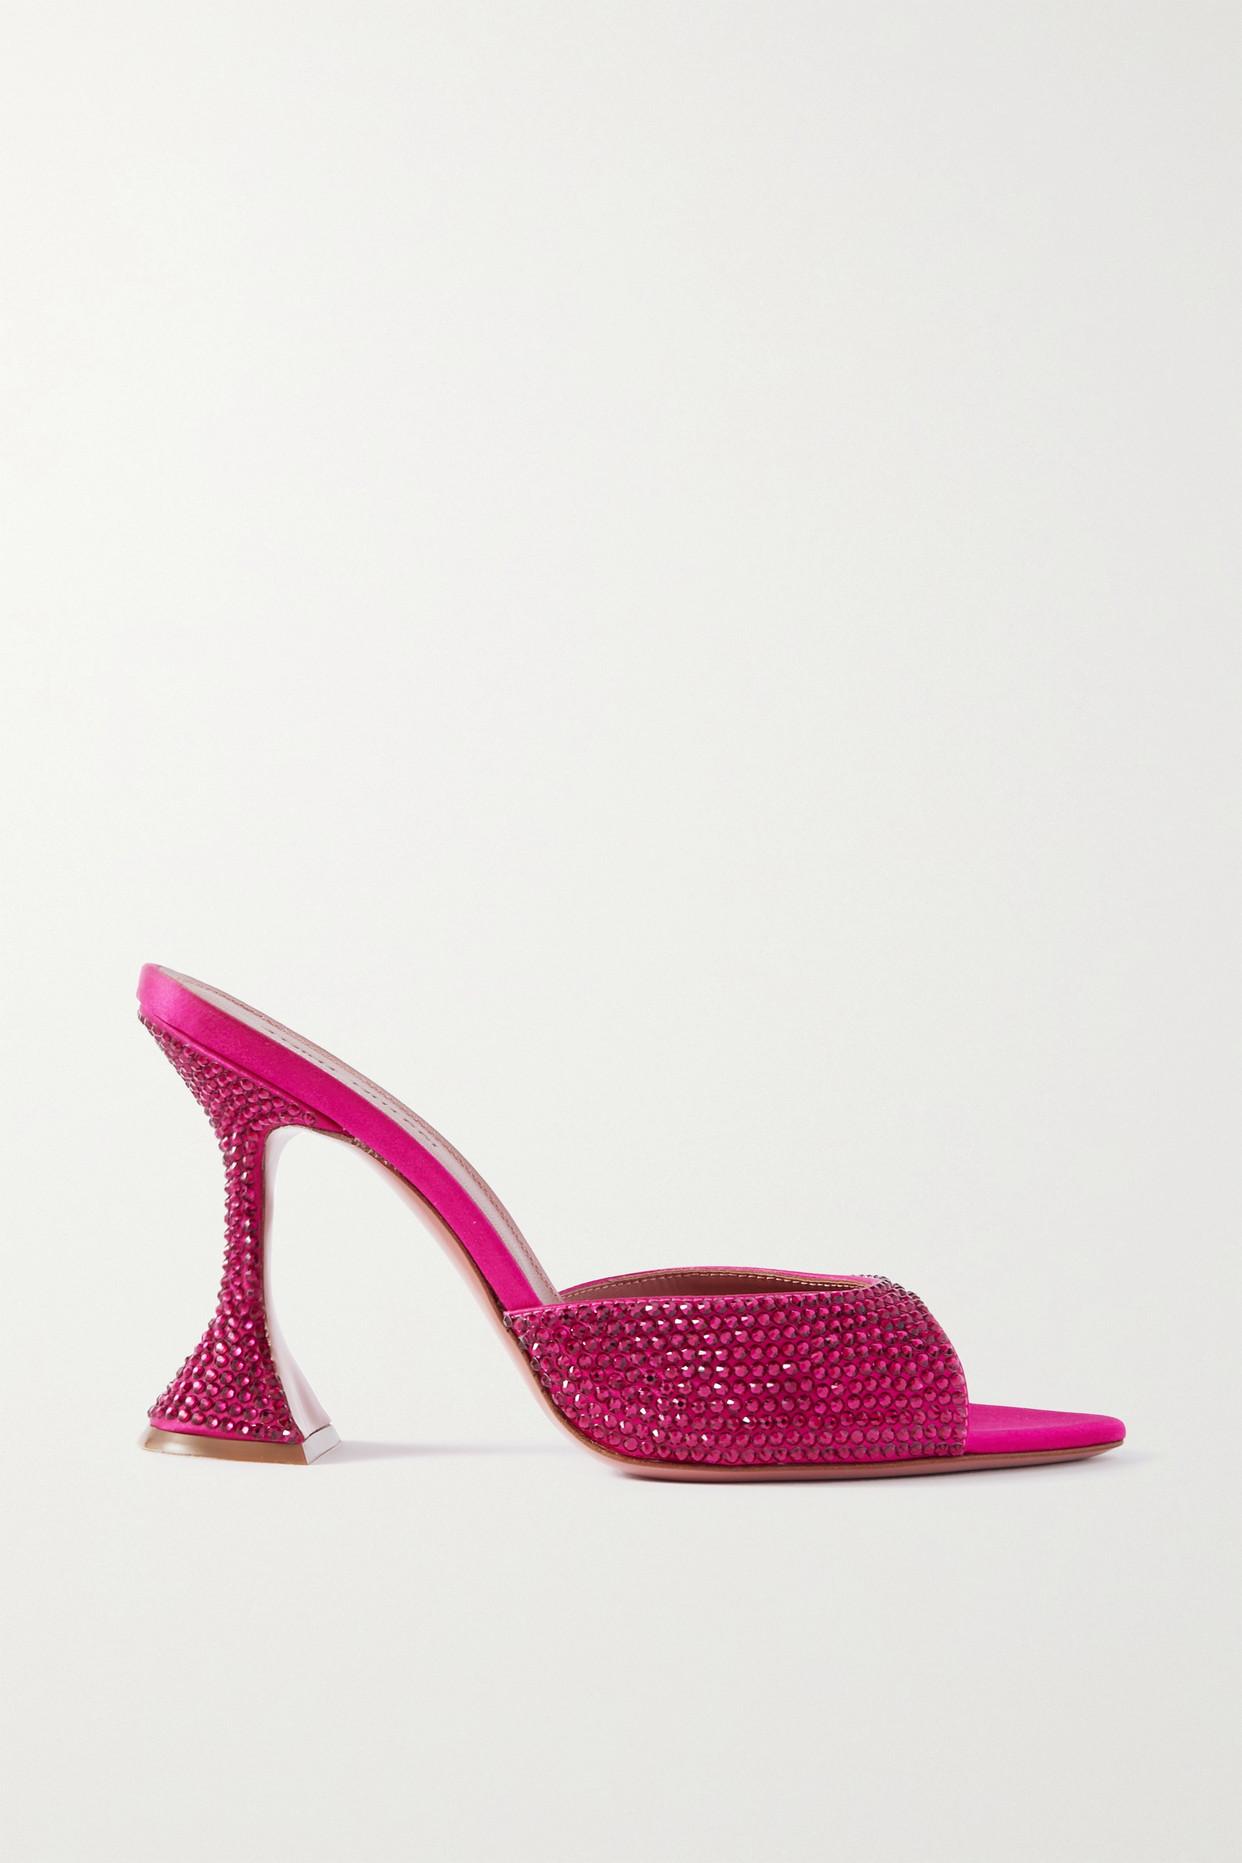 AMINA MUADDI Caroline Crystal-embellished Satin Mules in Pink | Lyst